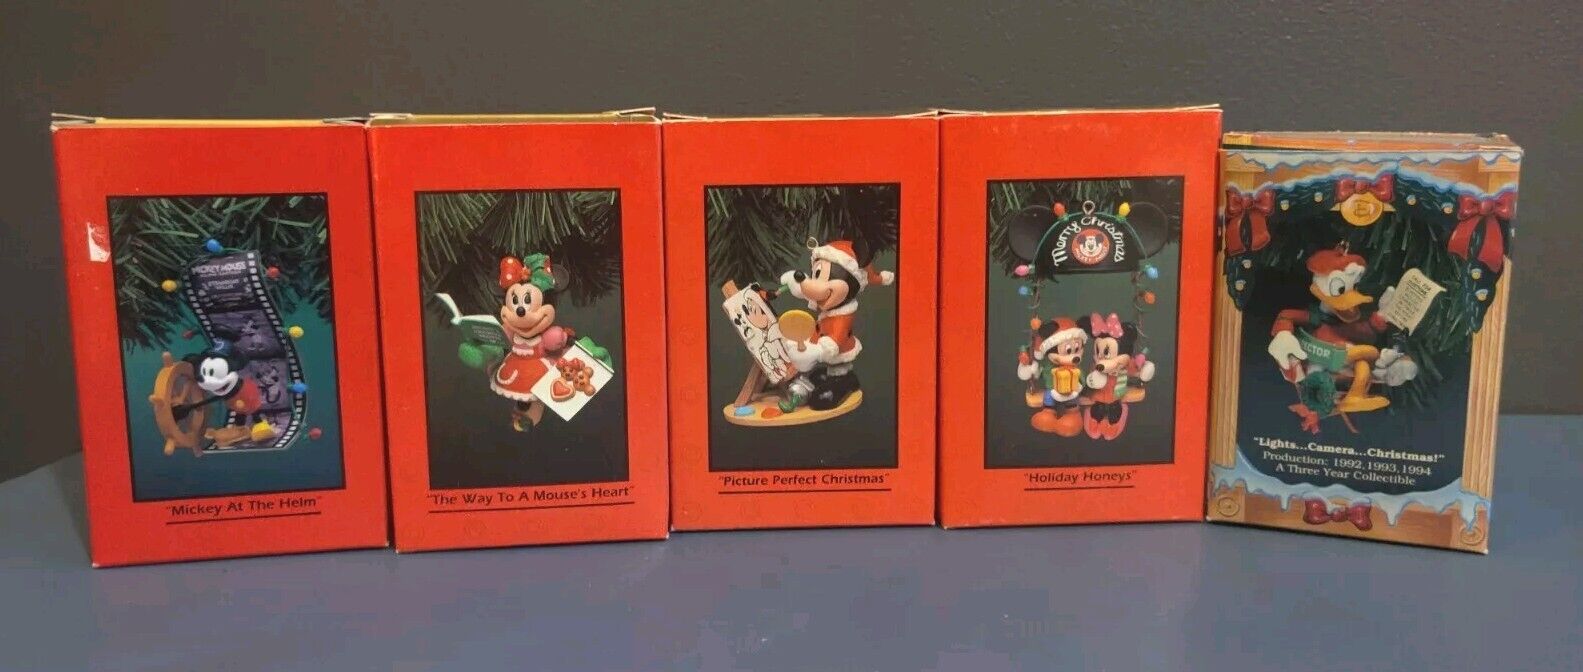 Enesco Treasury of Christmas ornaments - Disney - Lot of 5